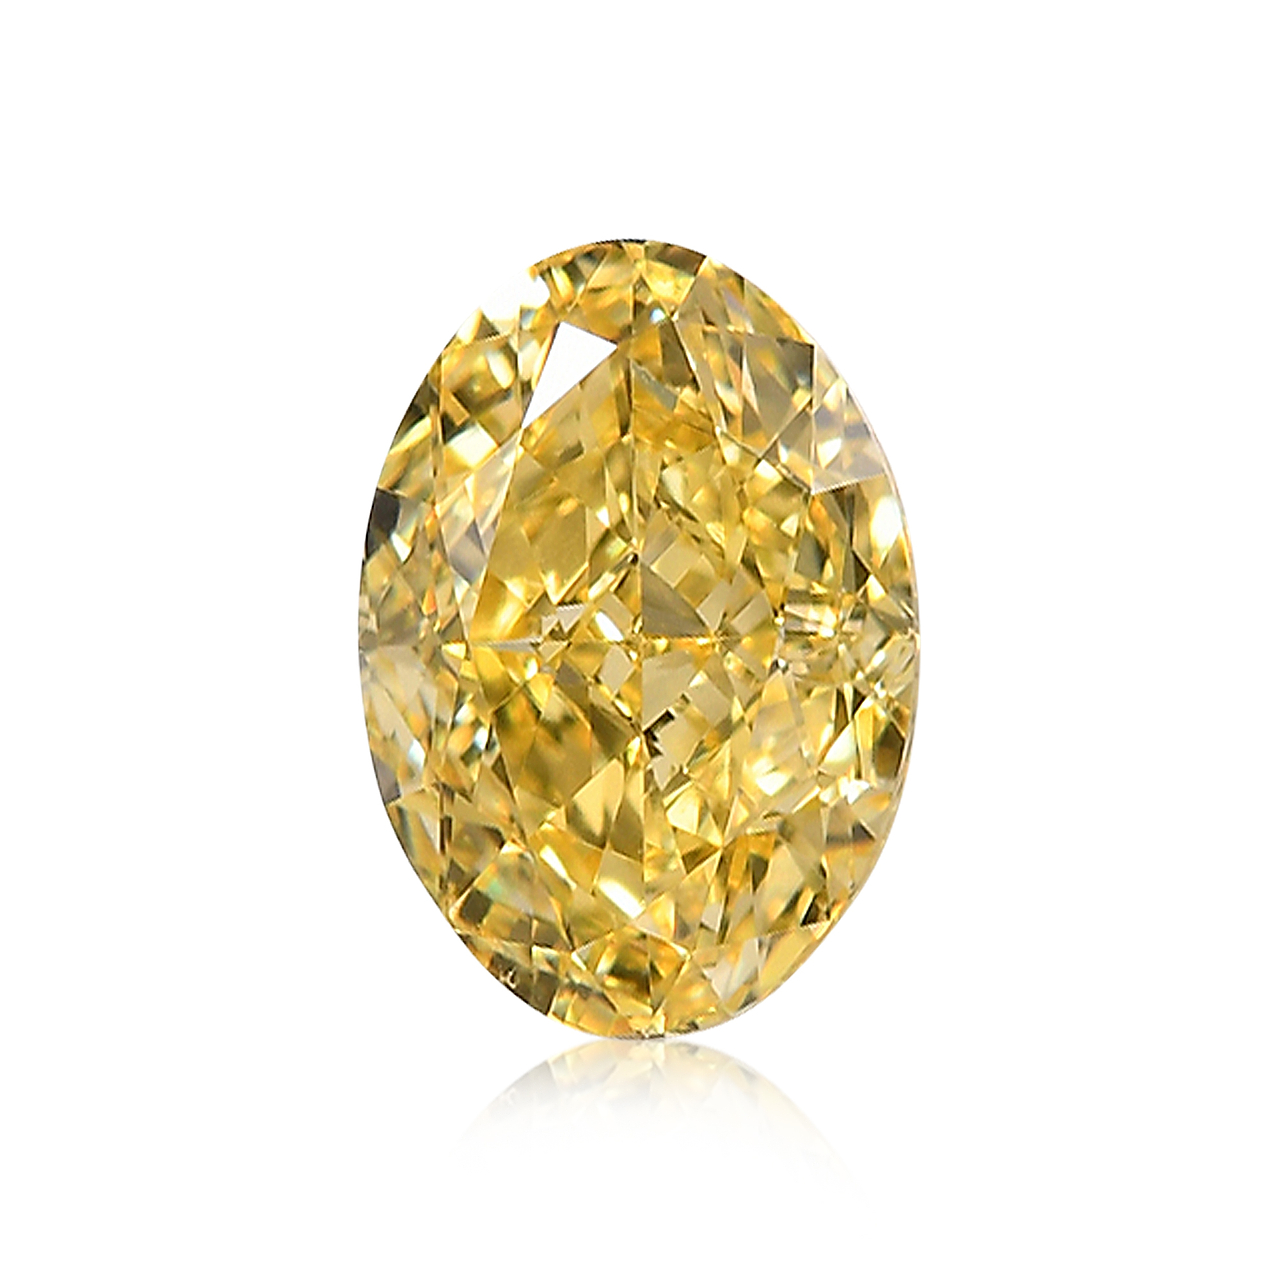 0.54 carat, Fancy Intense Yellow Diamond, Oval Shape, IF Clarity, GIA, SKU  598028